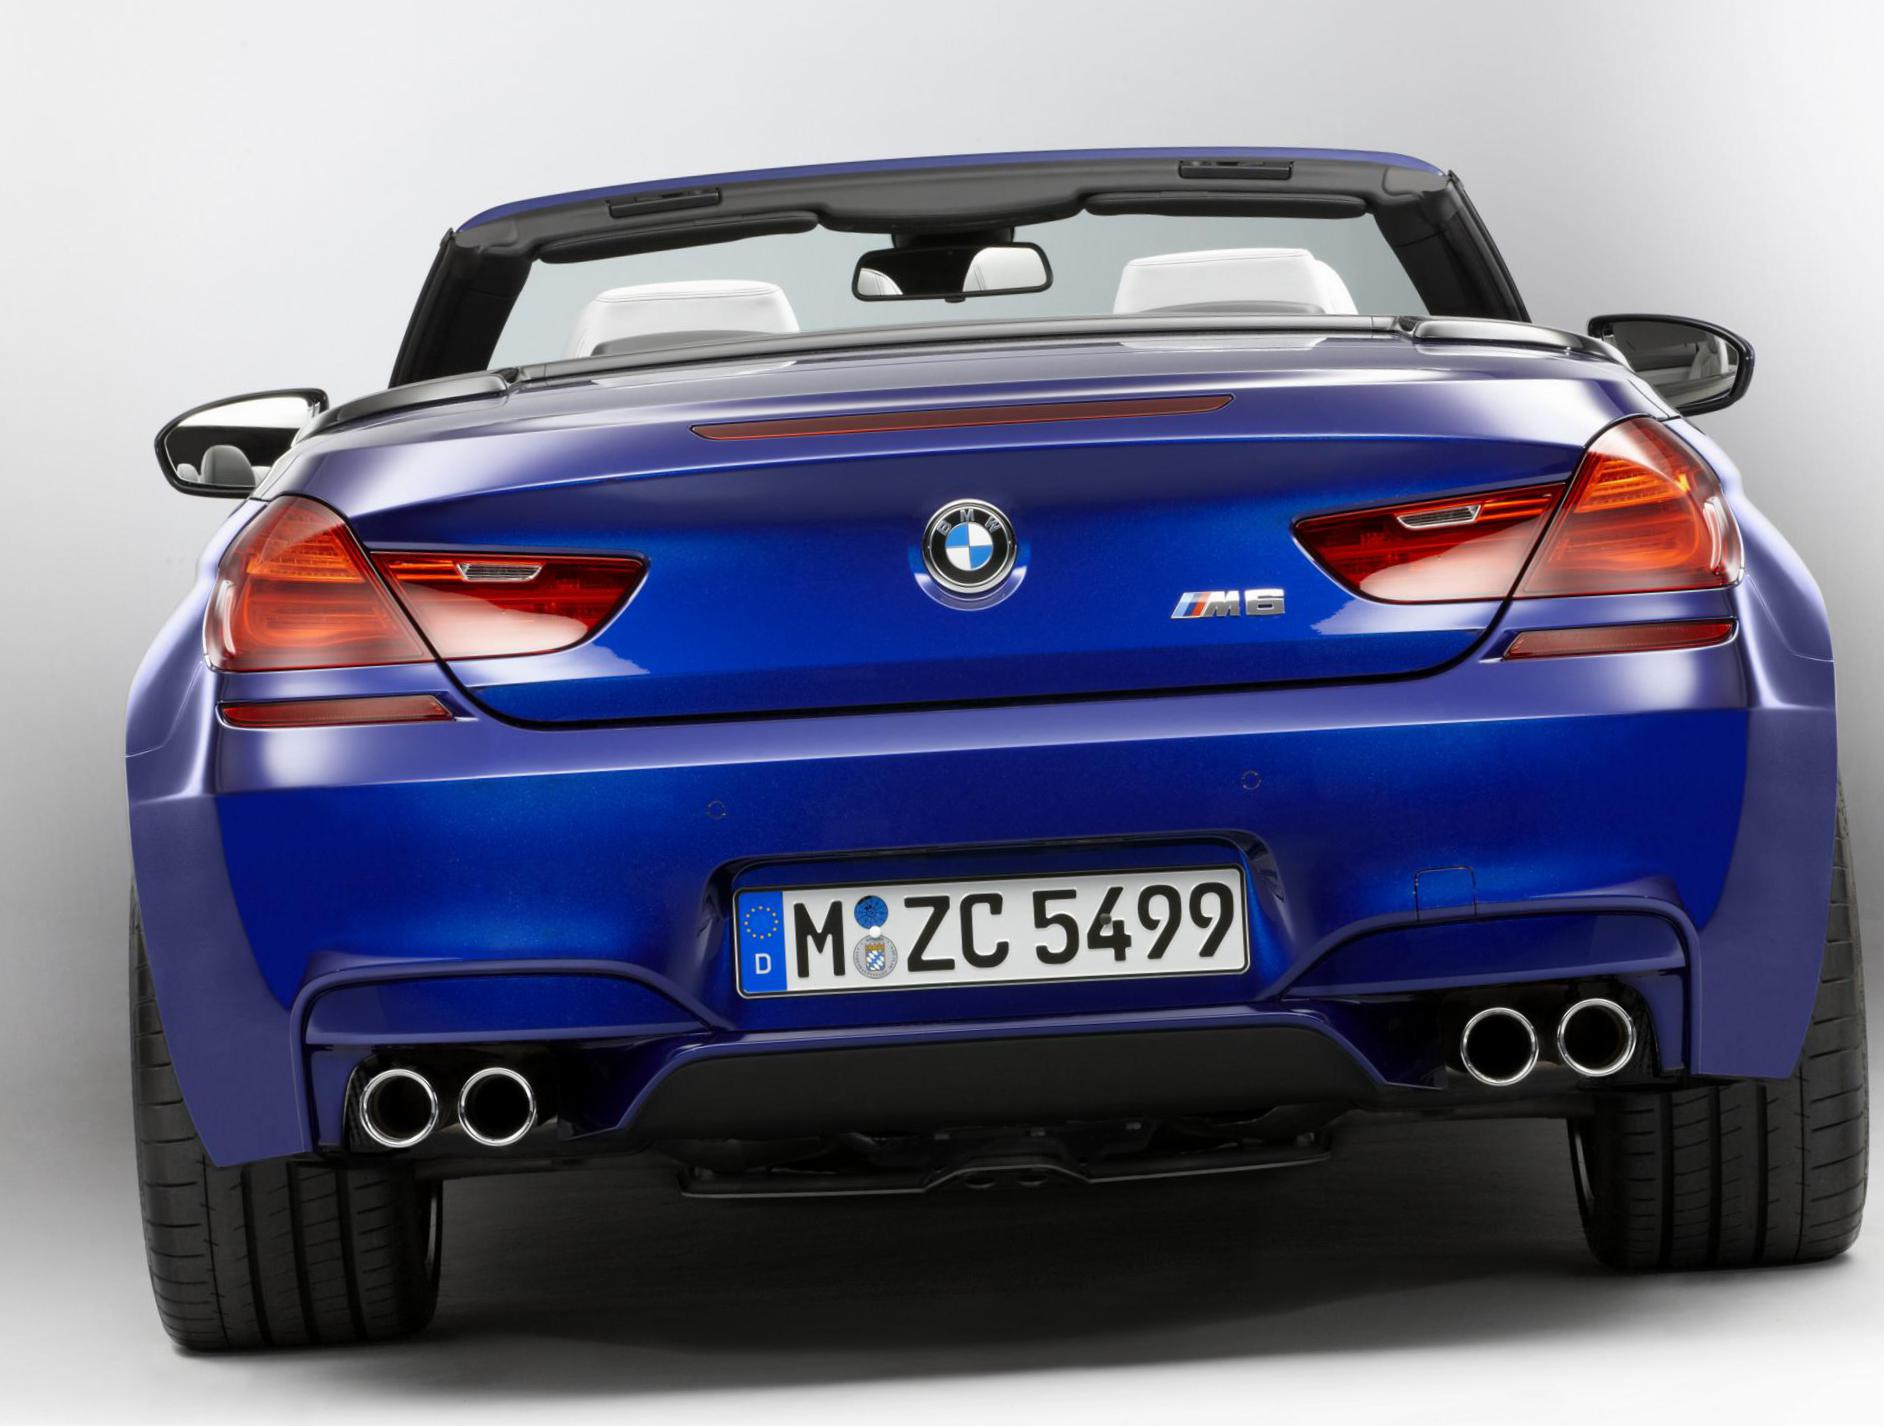 M6 Cabrio (F12) BMW configuration suv